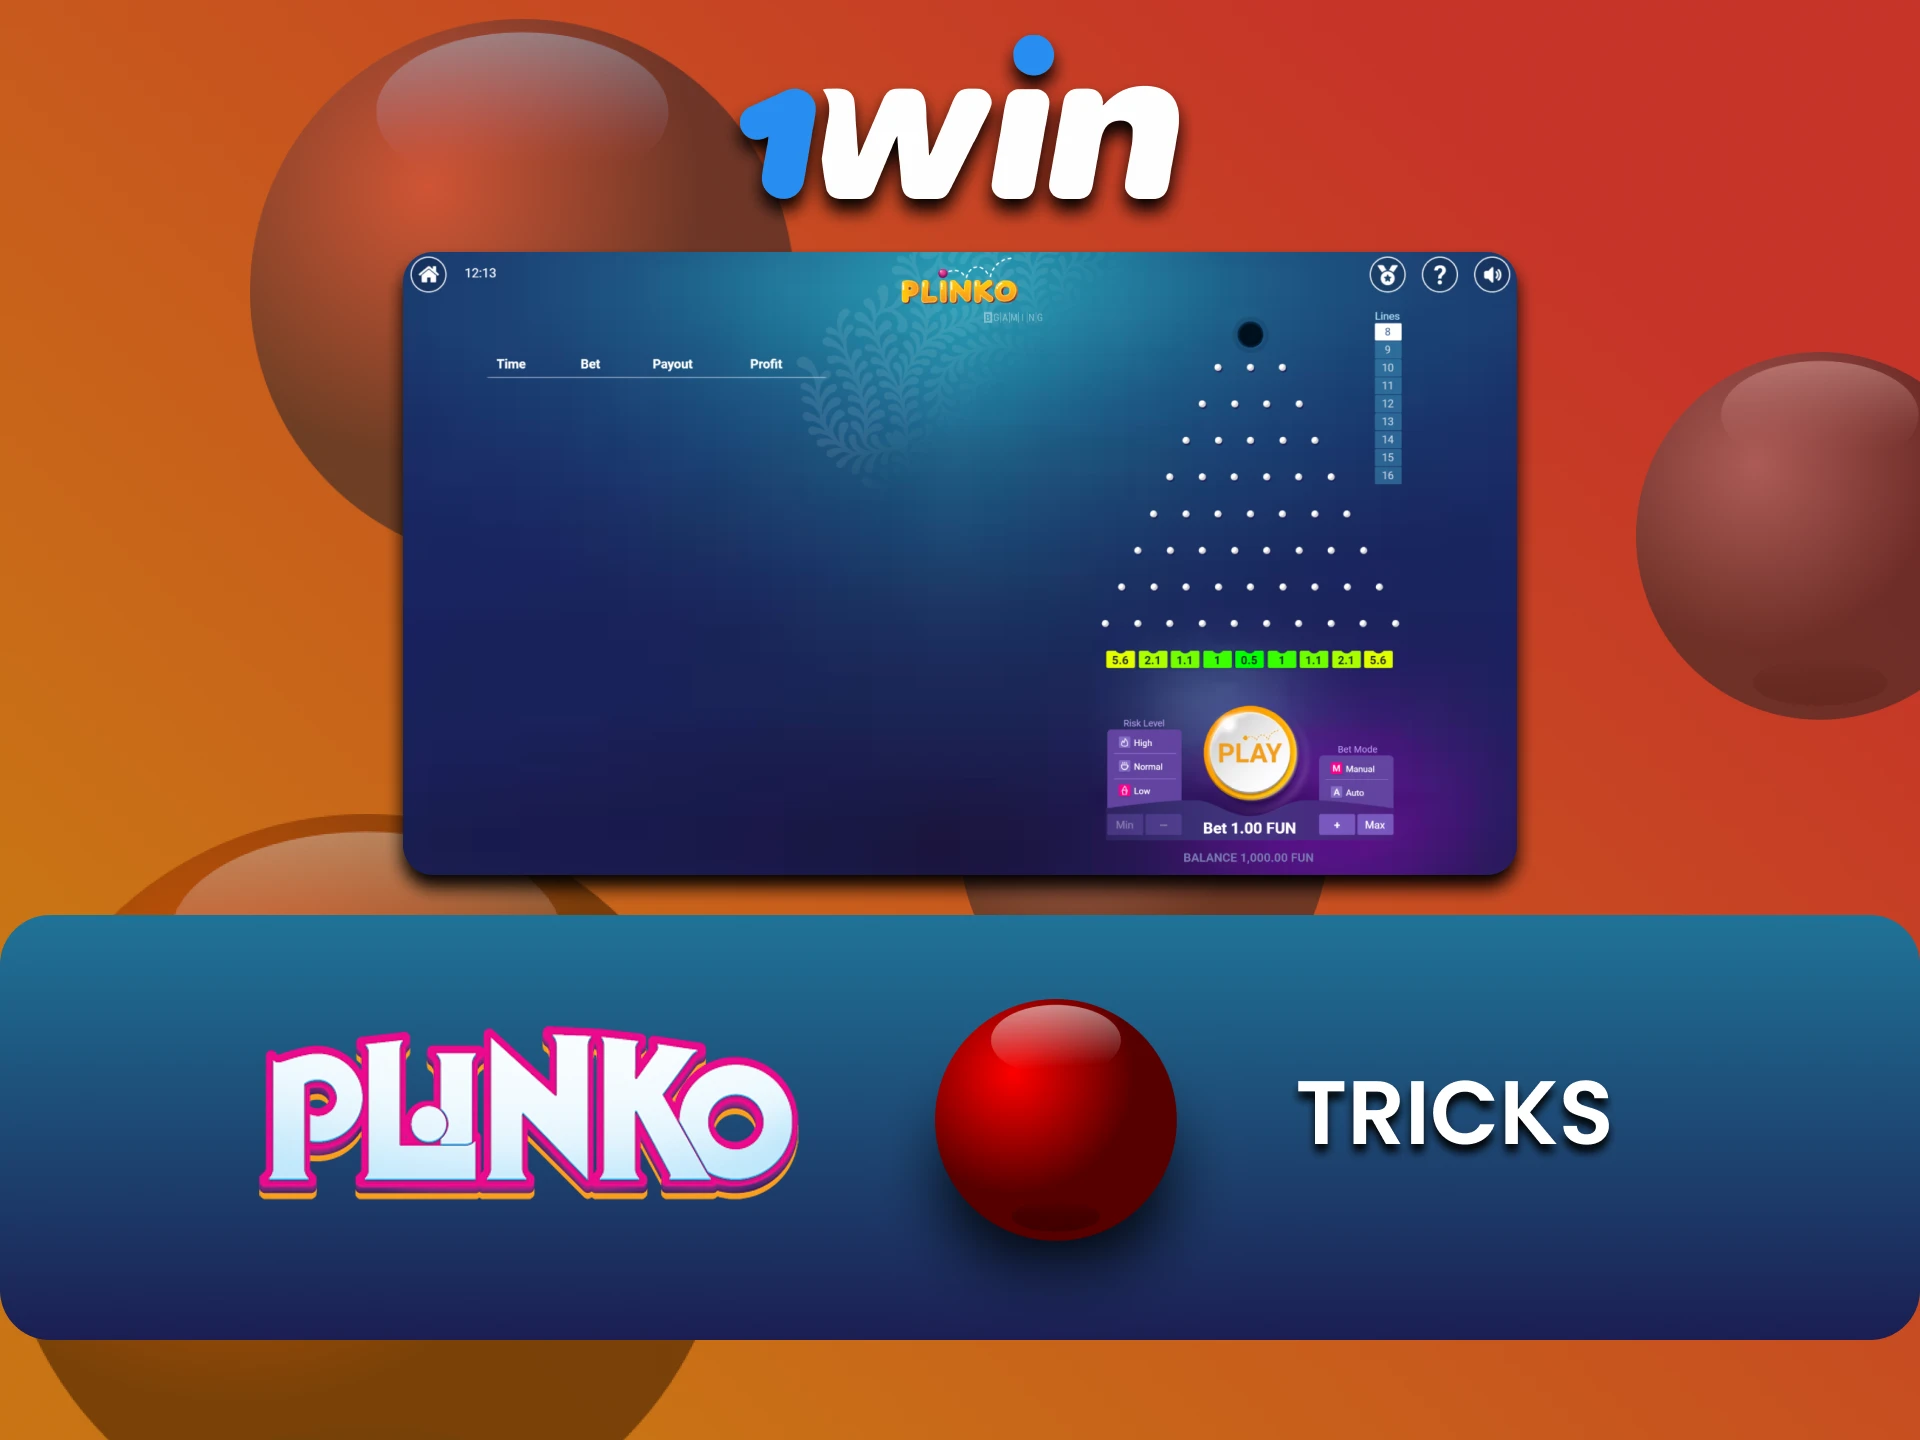 Learn tricks to win in Plinko at 1win.